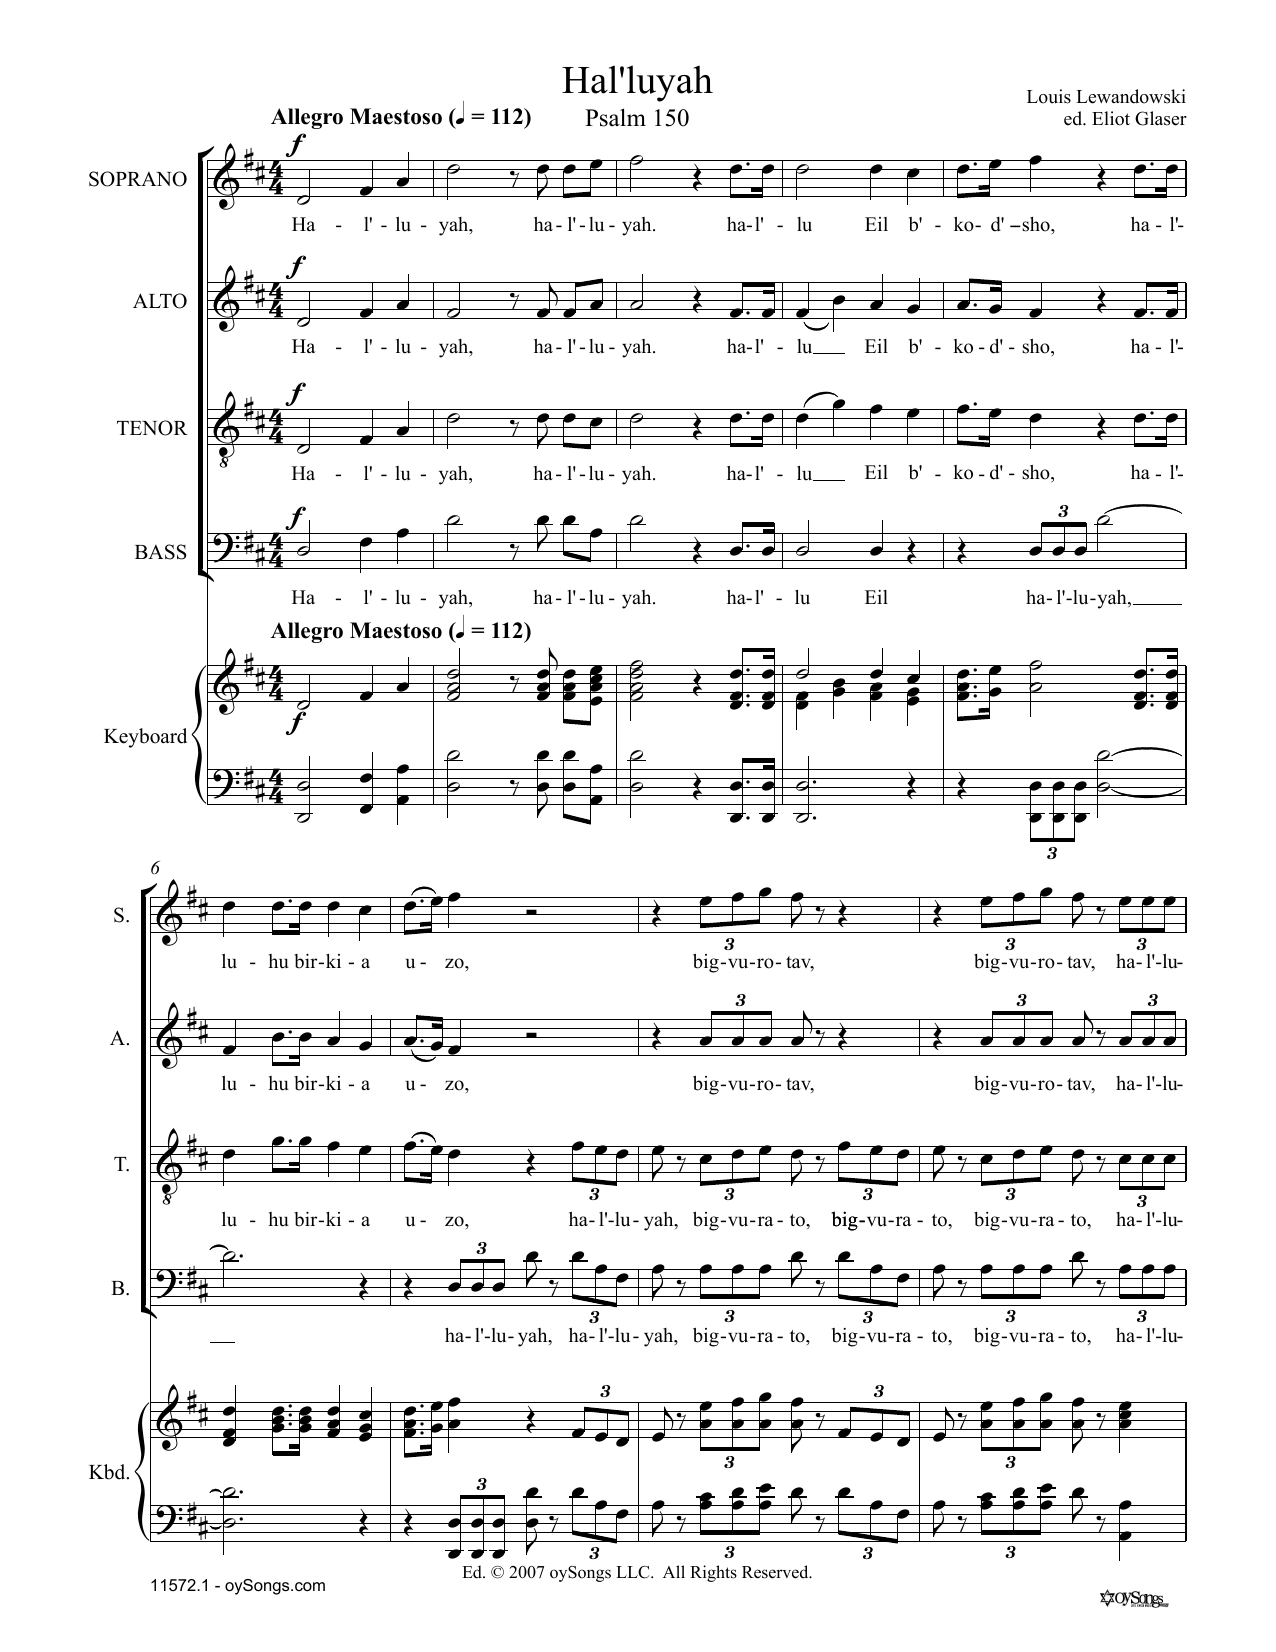 Eliot Glaser Hal'luyah (Psalm 150) Sheet Music Notes & Chords for SATB Choir - Download or Print PDF